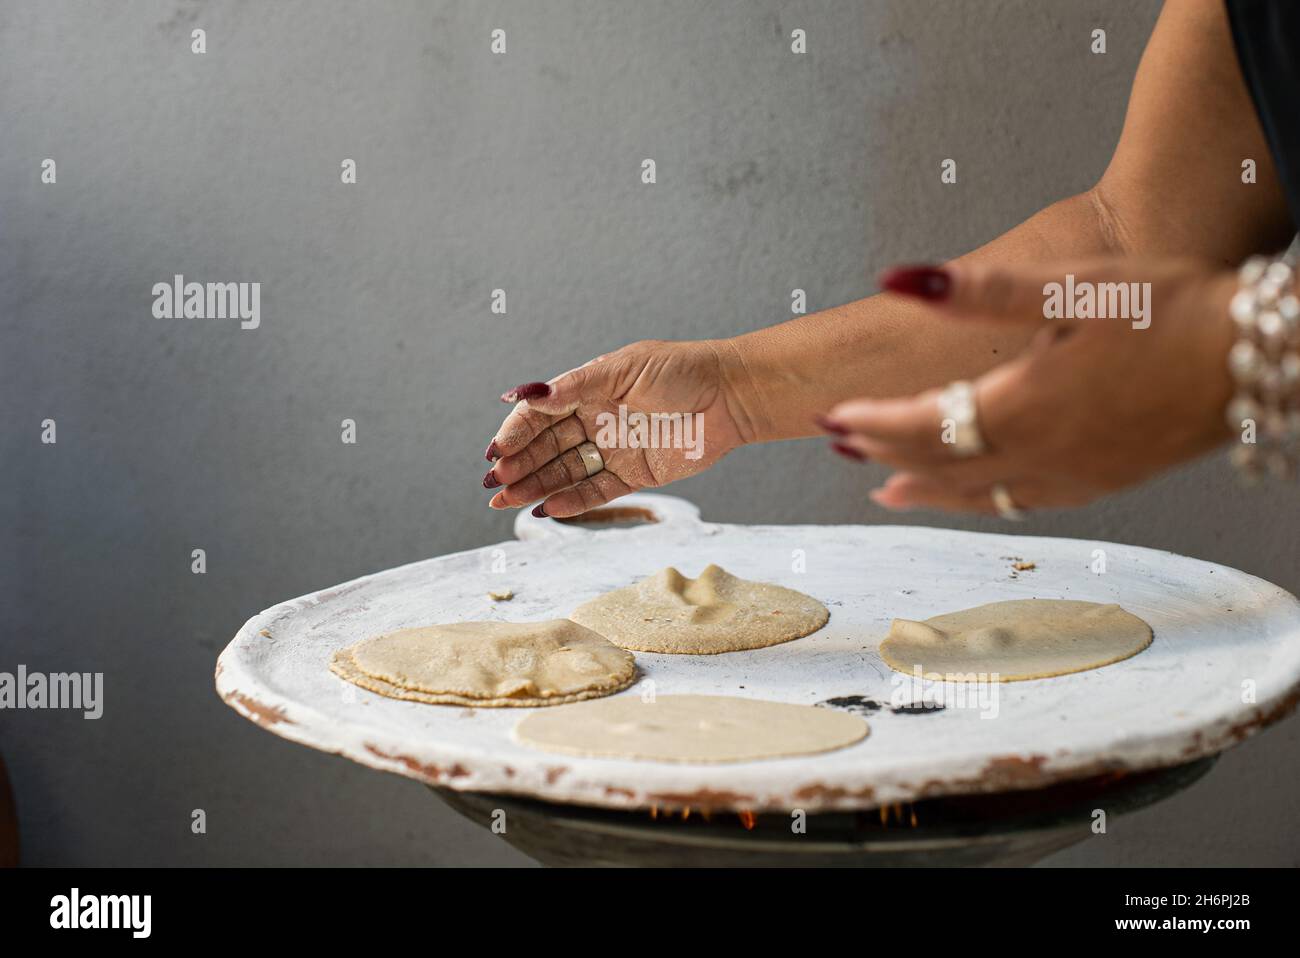 https://c8.alamy.com/comp/2H6PJ2B/woman-making-mexican-corn-tortillas-on-a-comal-2H6PJ2B.jpg